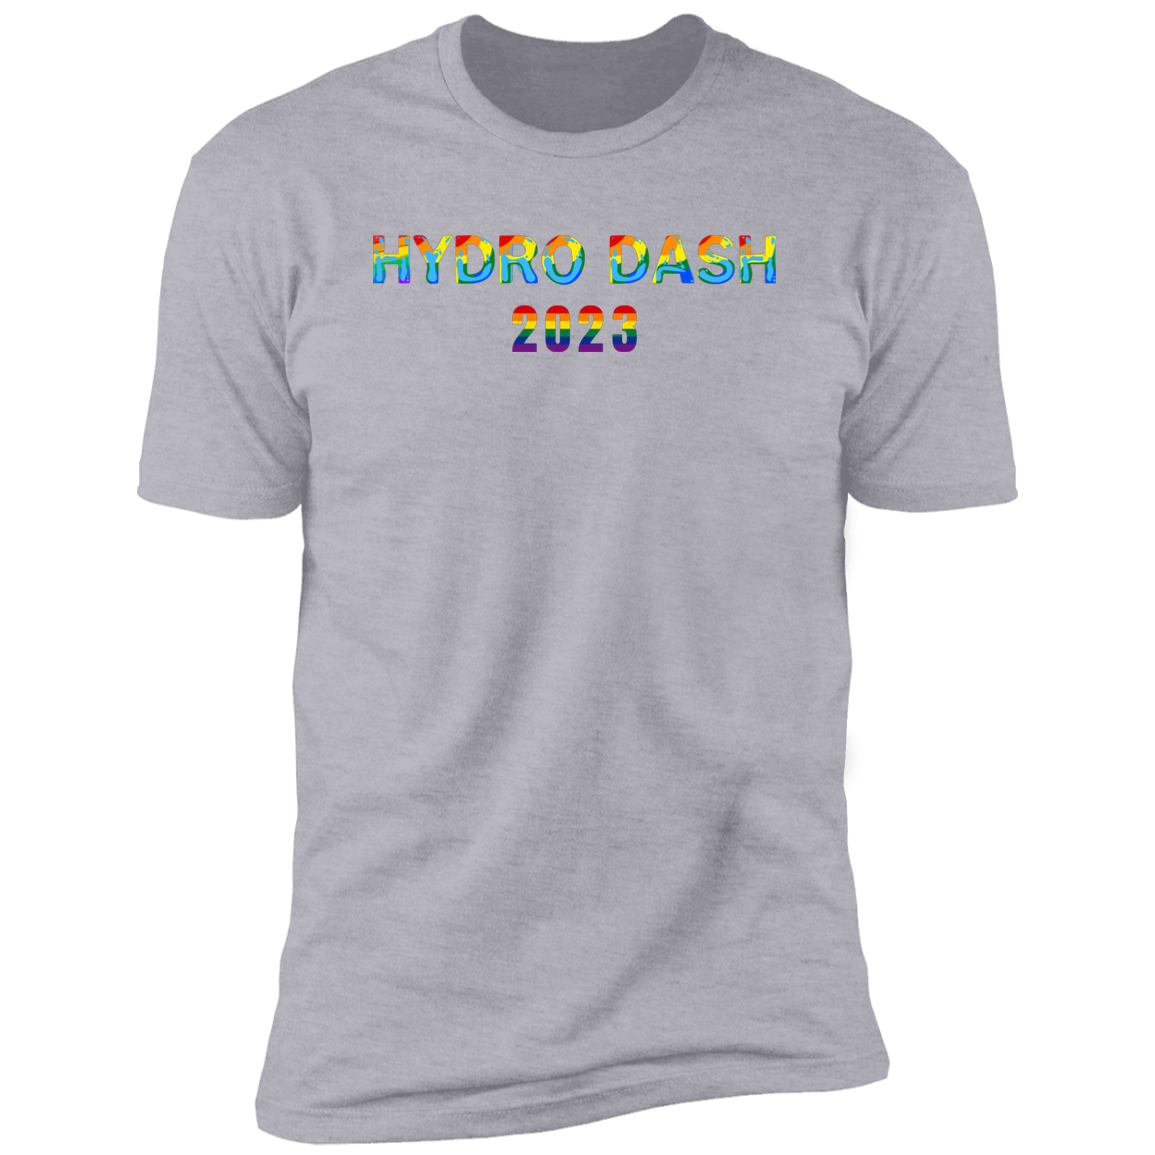 Hydro Dash Pride 2023 t-shirt, dog pride dog Hydro dash shirt for humans, in light heather grayHydro Dash Pride 2023 t-shirt, dog pride dog Hydro dash shirt for humans, in light heather gray